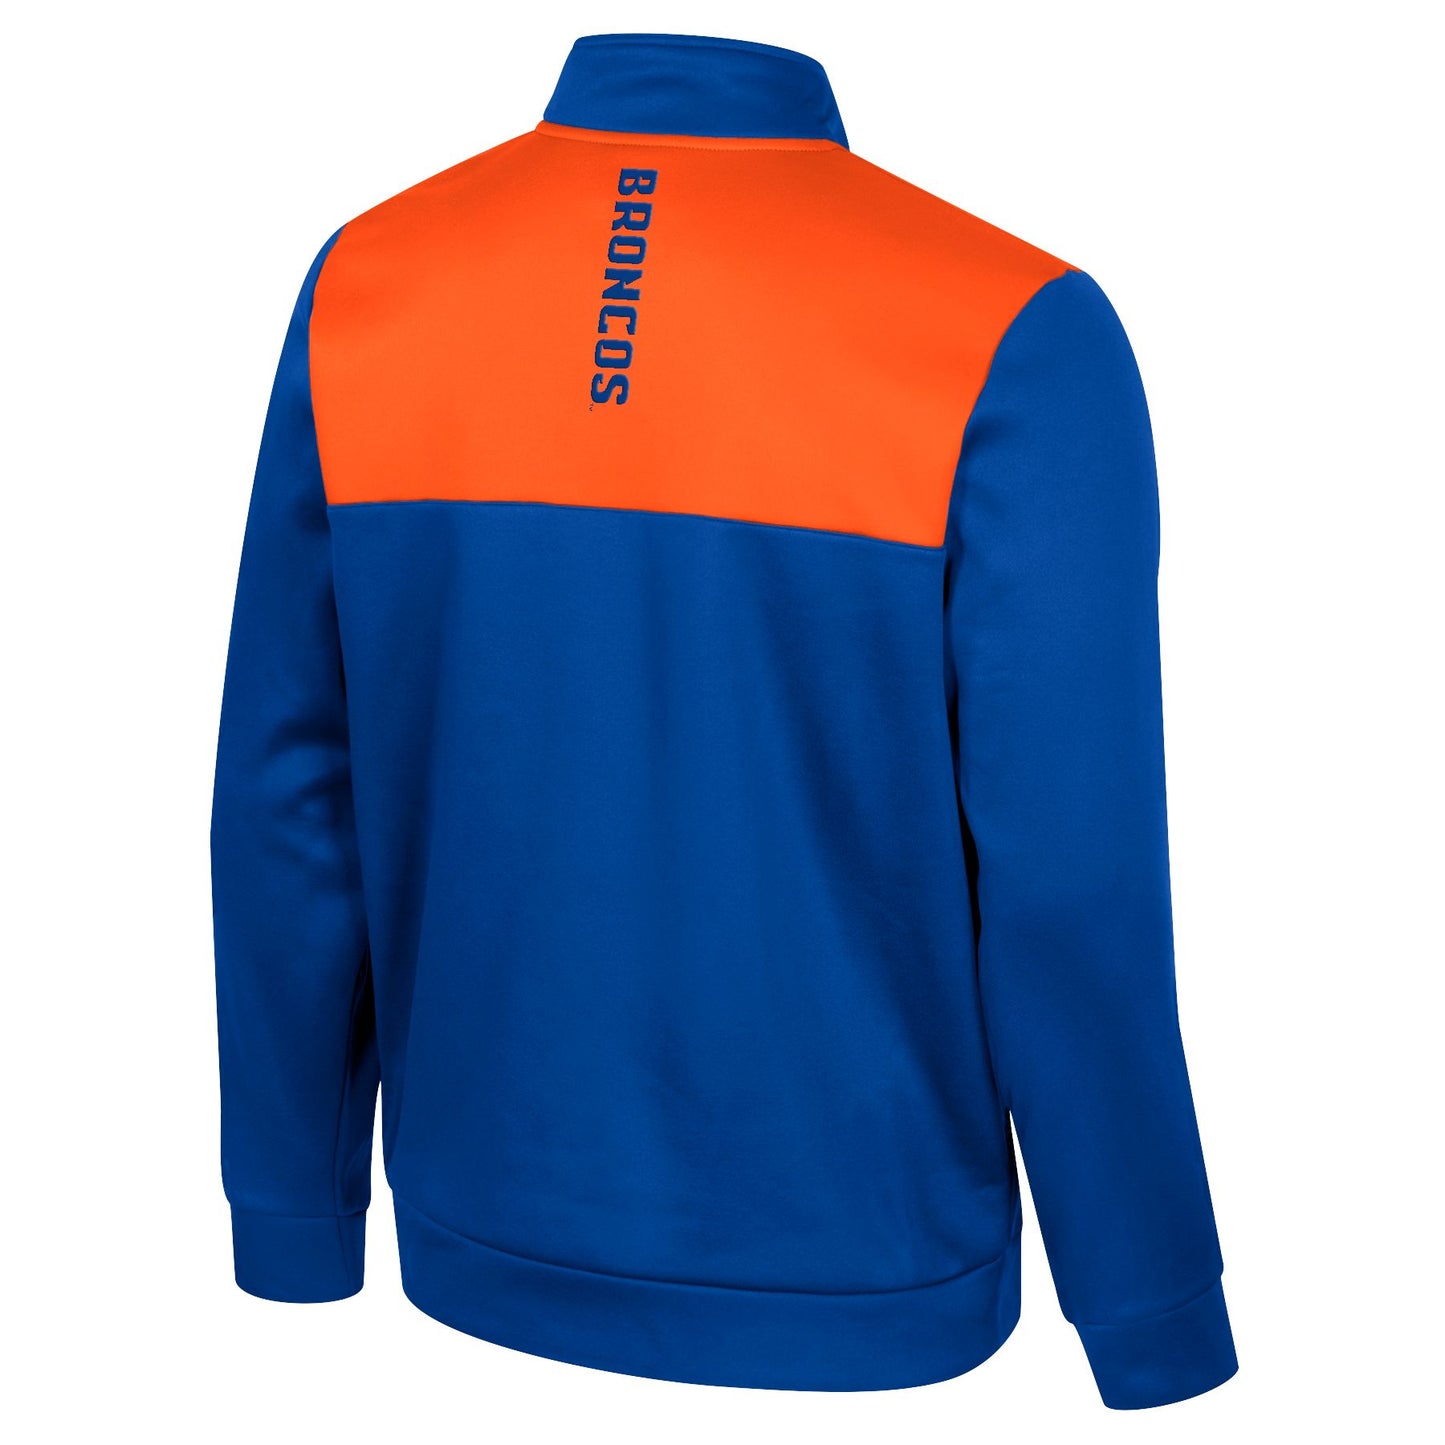 Boise State Broncos Colosseum Men's 1/4 Zip Jacket (Blue/Orange)